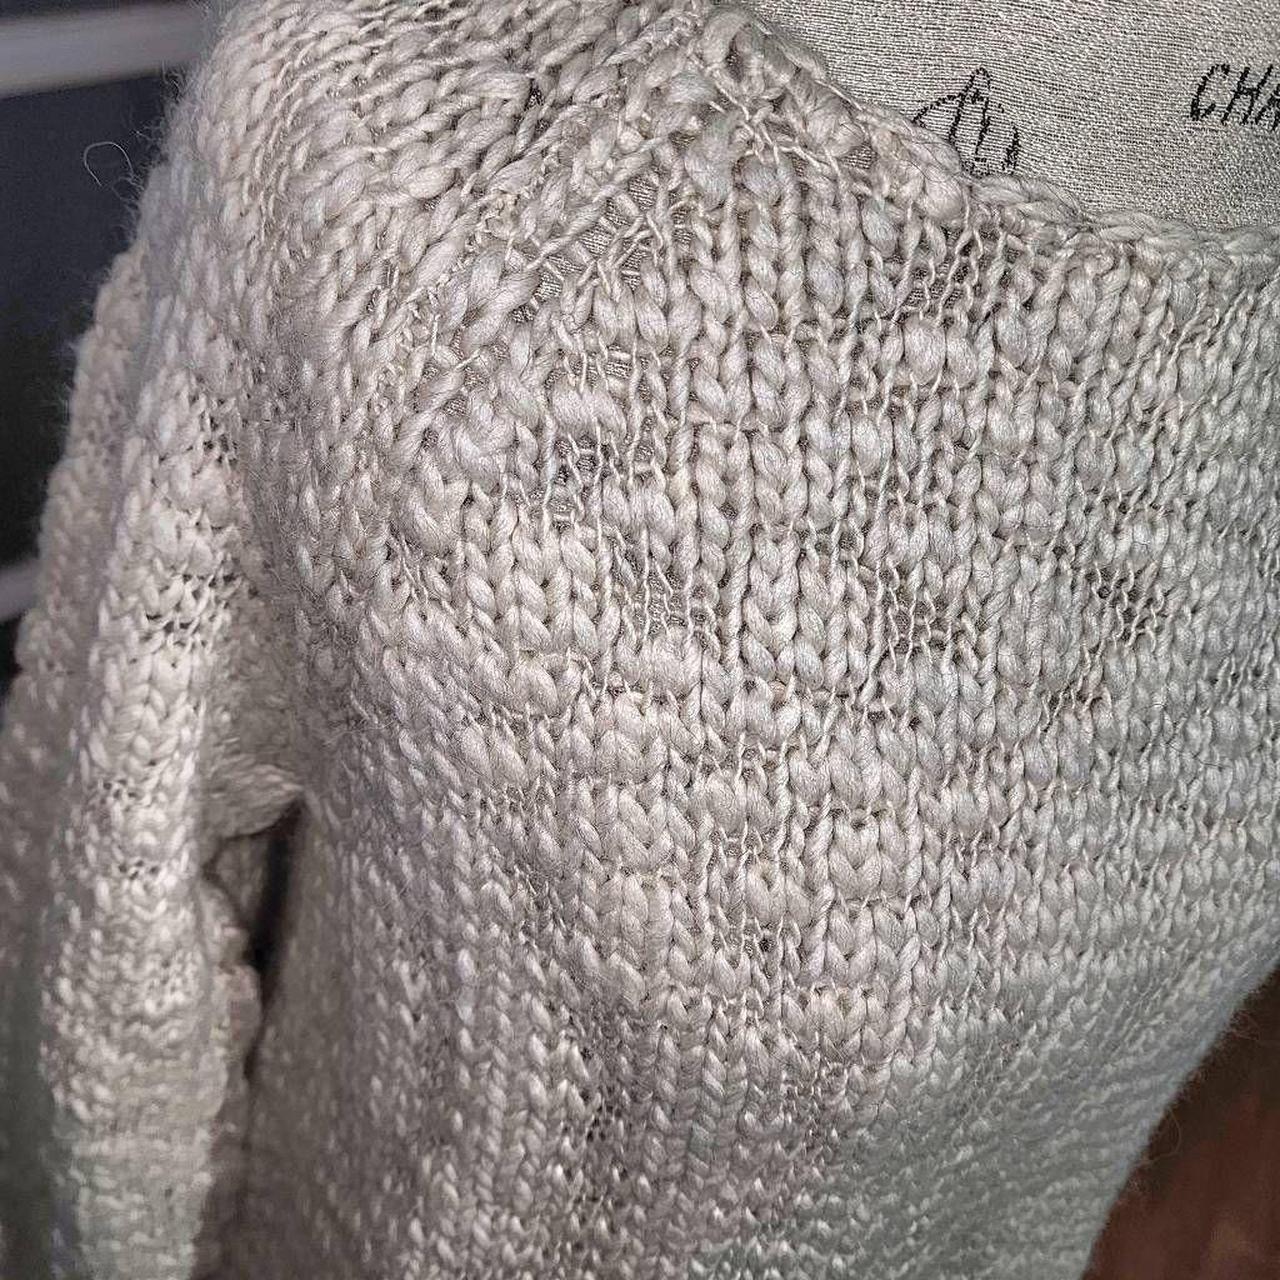 Title: J.Jill Cream Knit Relaxed Fit Sweater NWT - Depop